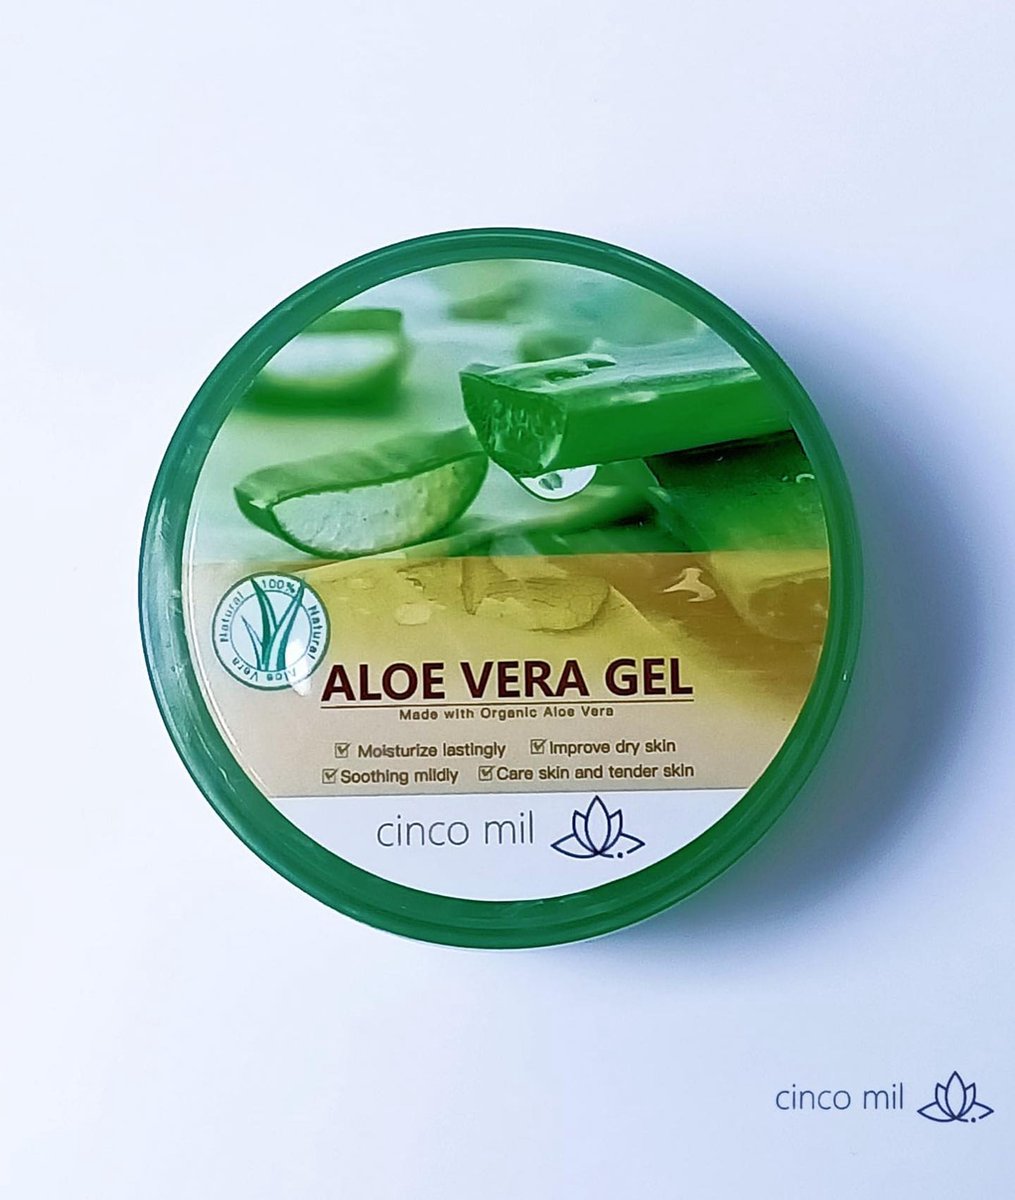 cinco mil - AloeVera Gel - 100% Natural - Skincare - Luxe gift - Gezichtsverzorging - Cadeau - Dames cadeau - Cincomil.nl cadeau - Huidverzorging - Geschenk - Voor alle huistype